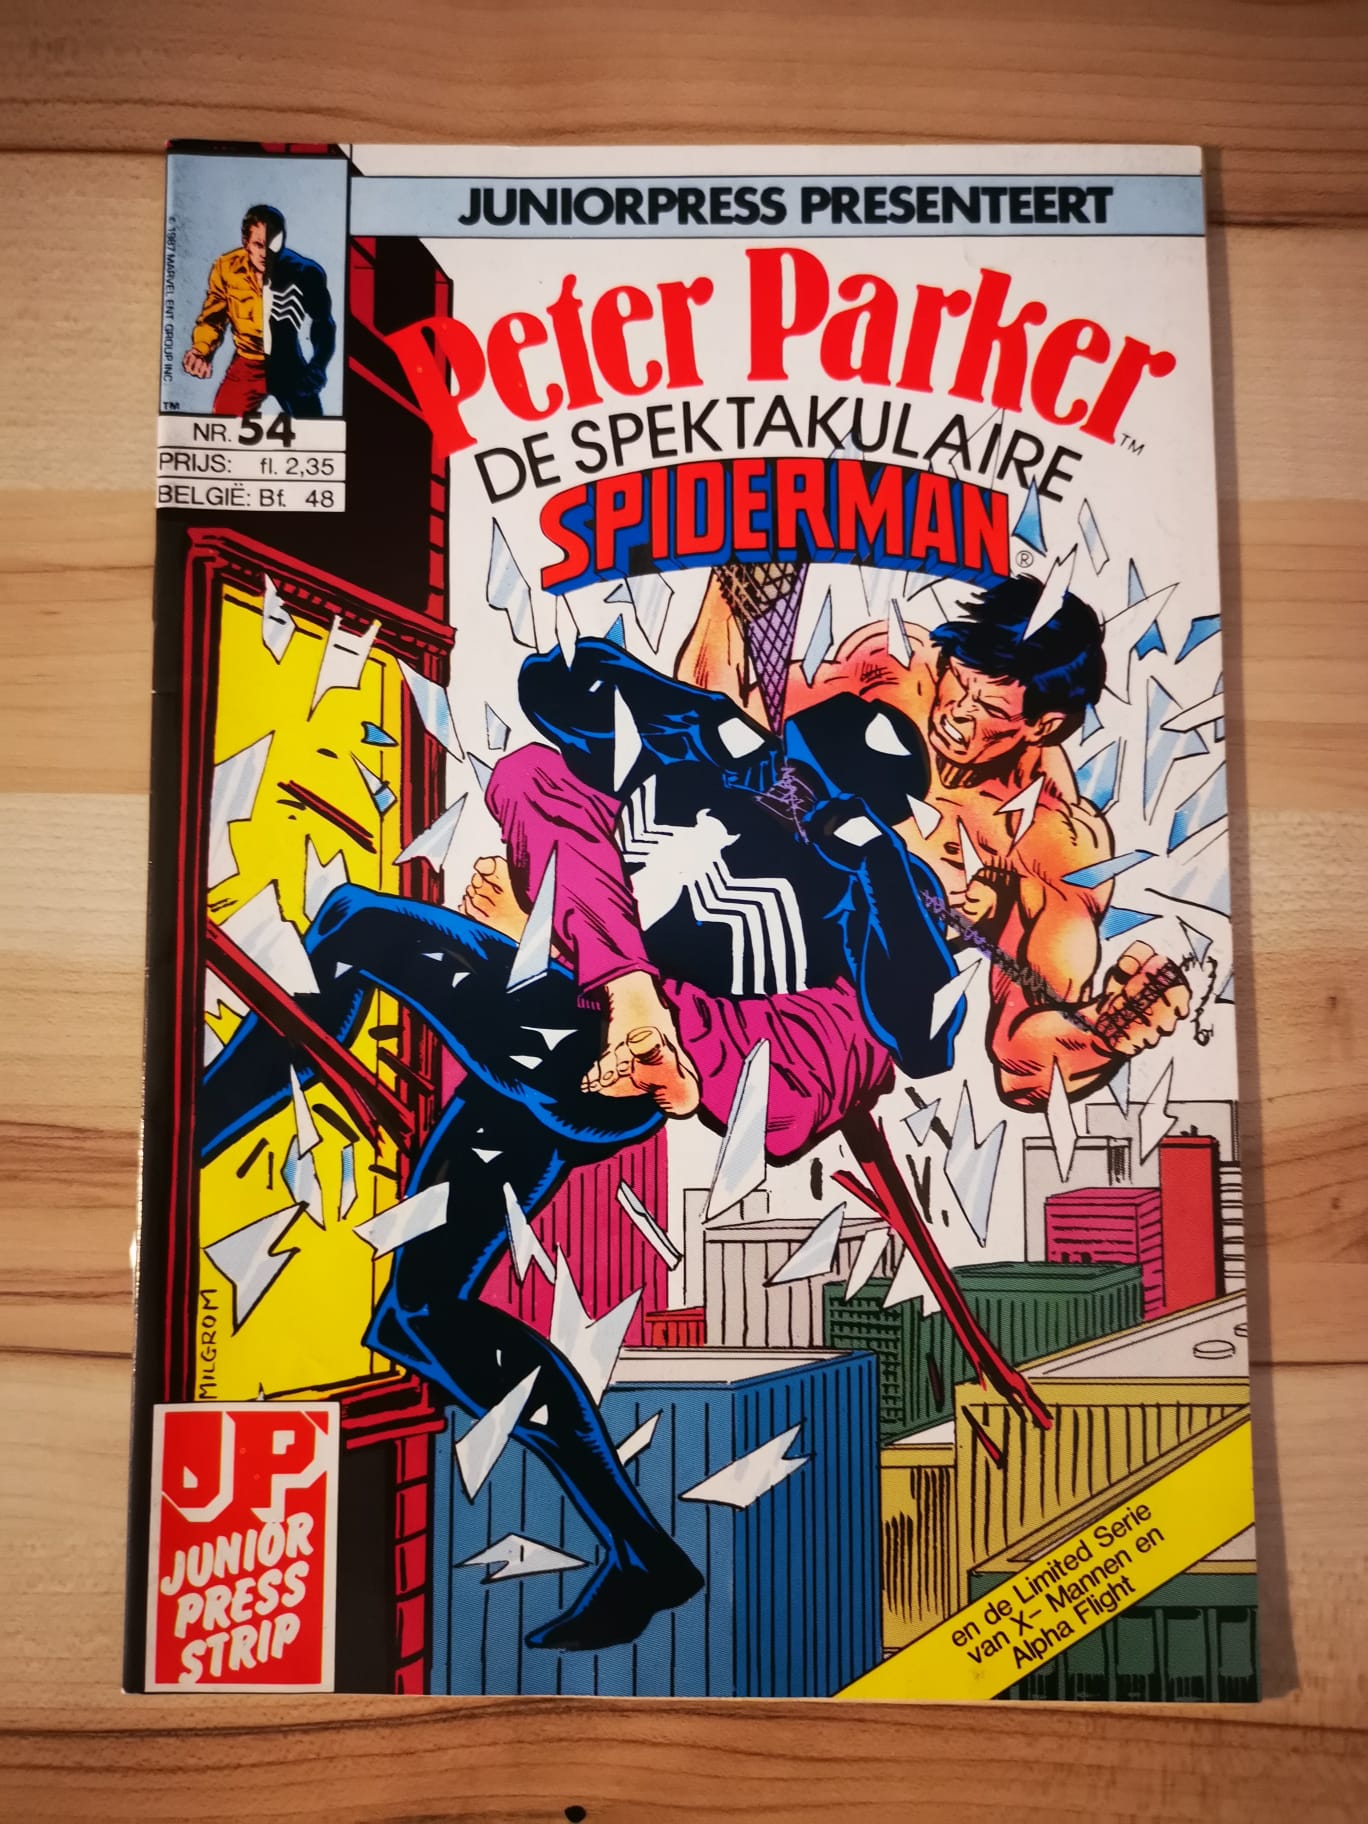 Peter Parker De spektakulaire spiderman #54